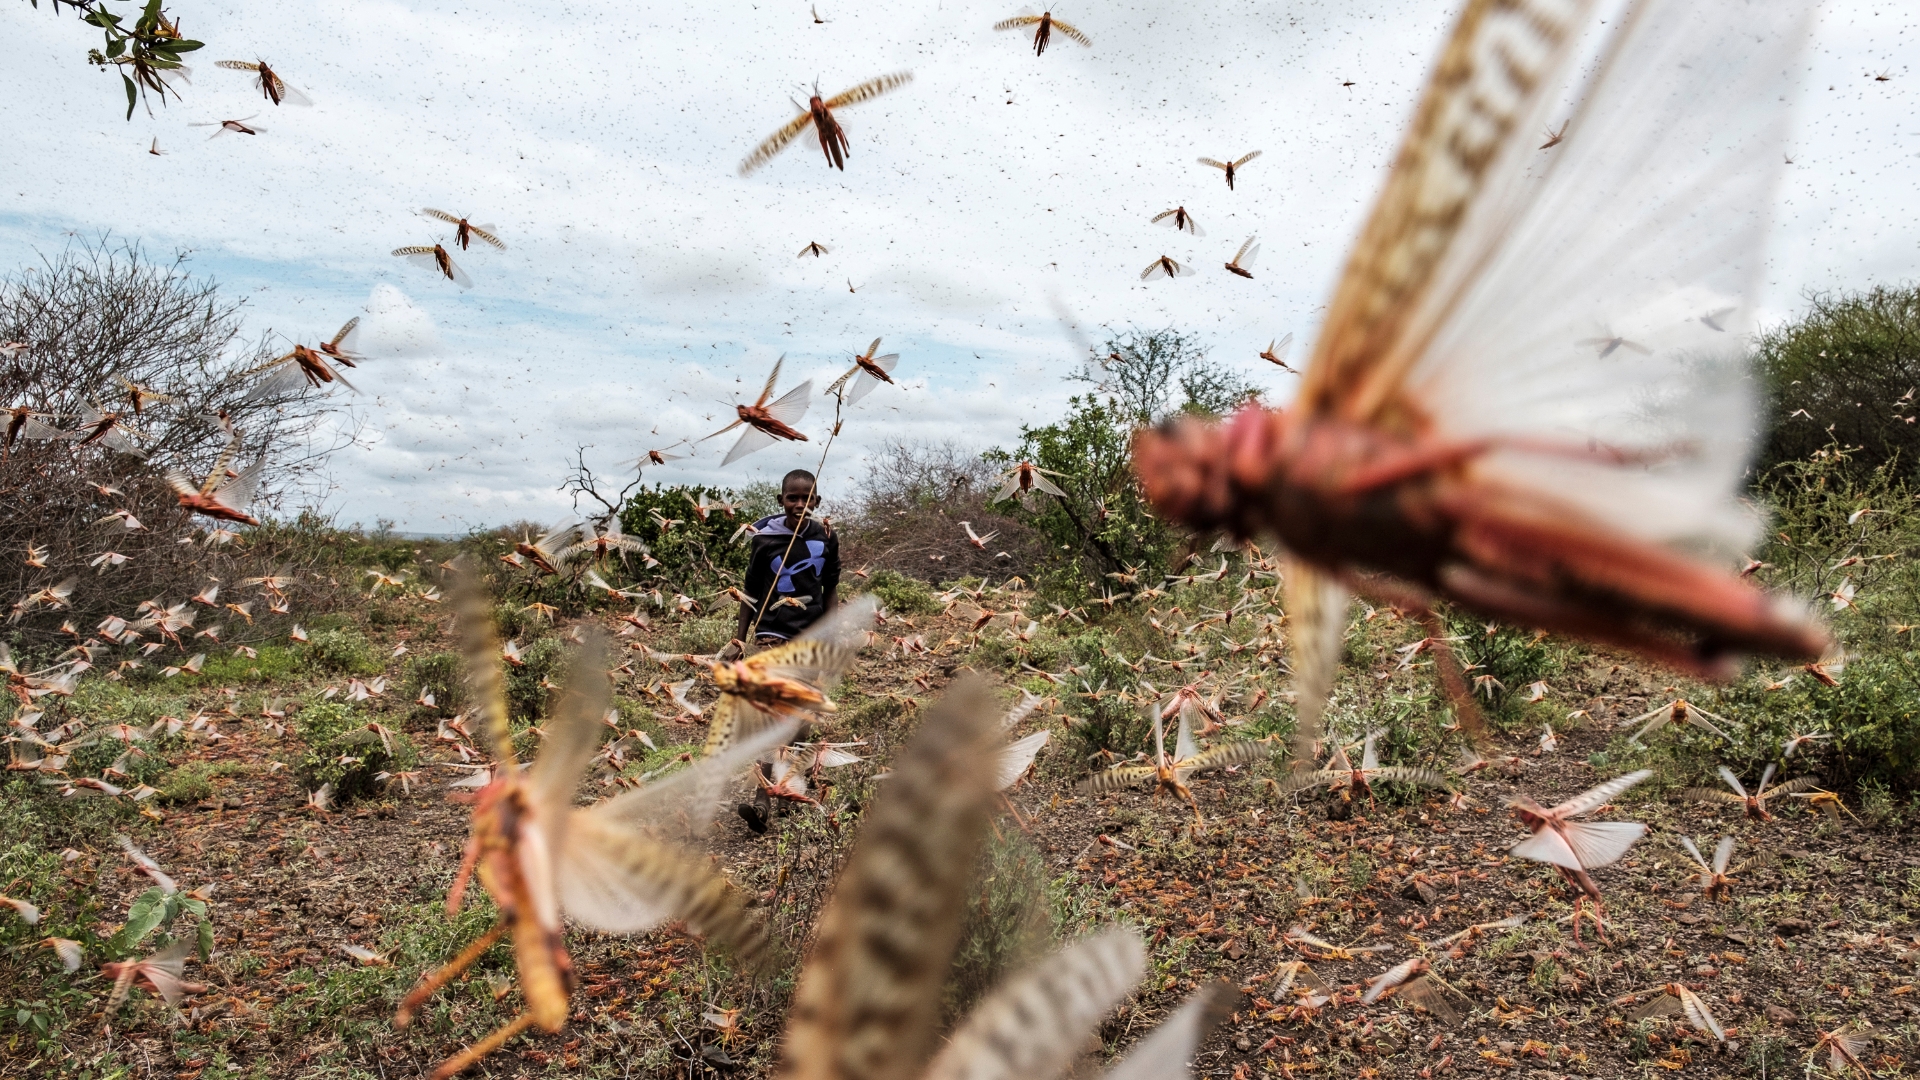 Locust swarms in East Africa: Billions descend on Ethiopia, Somalia, Kenya  - The Washington Post